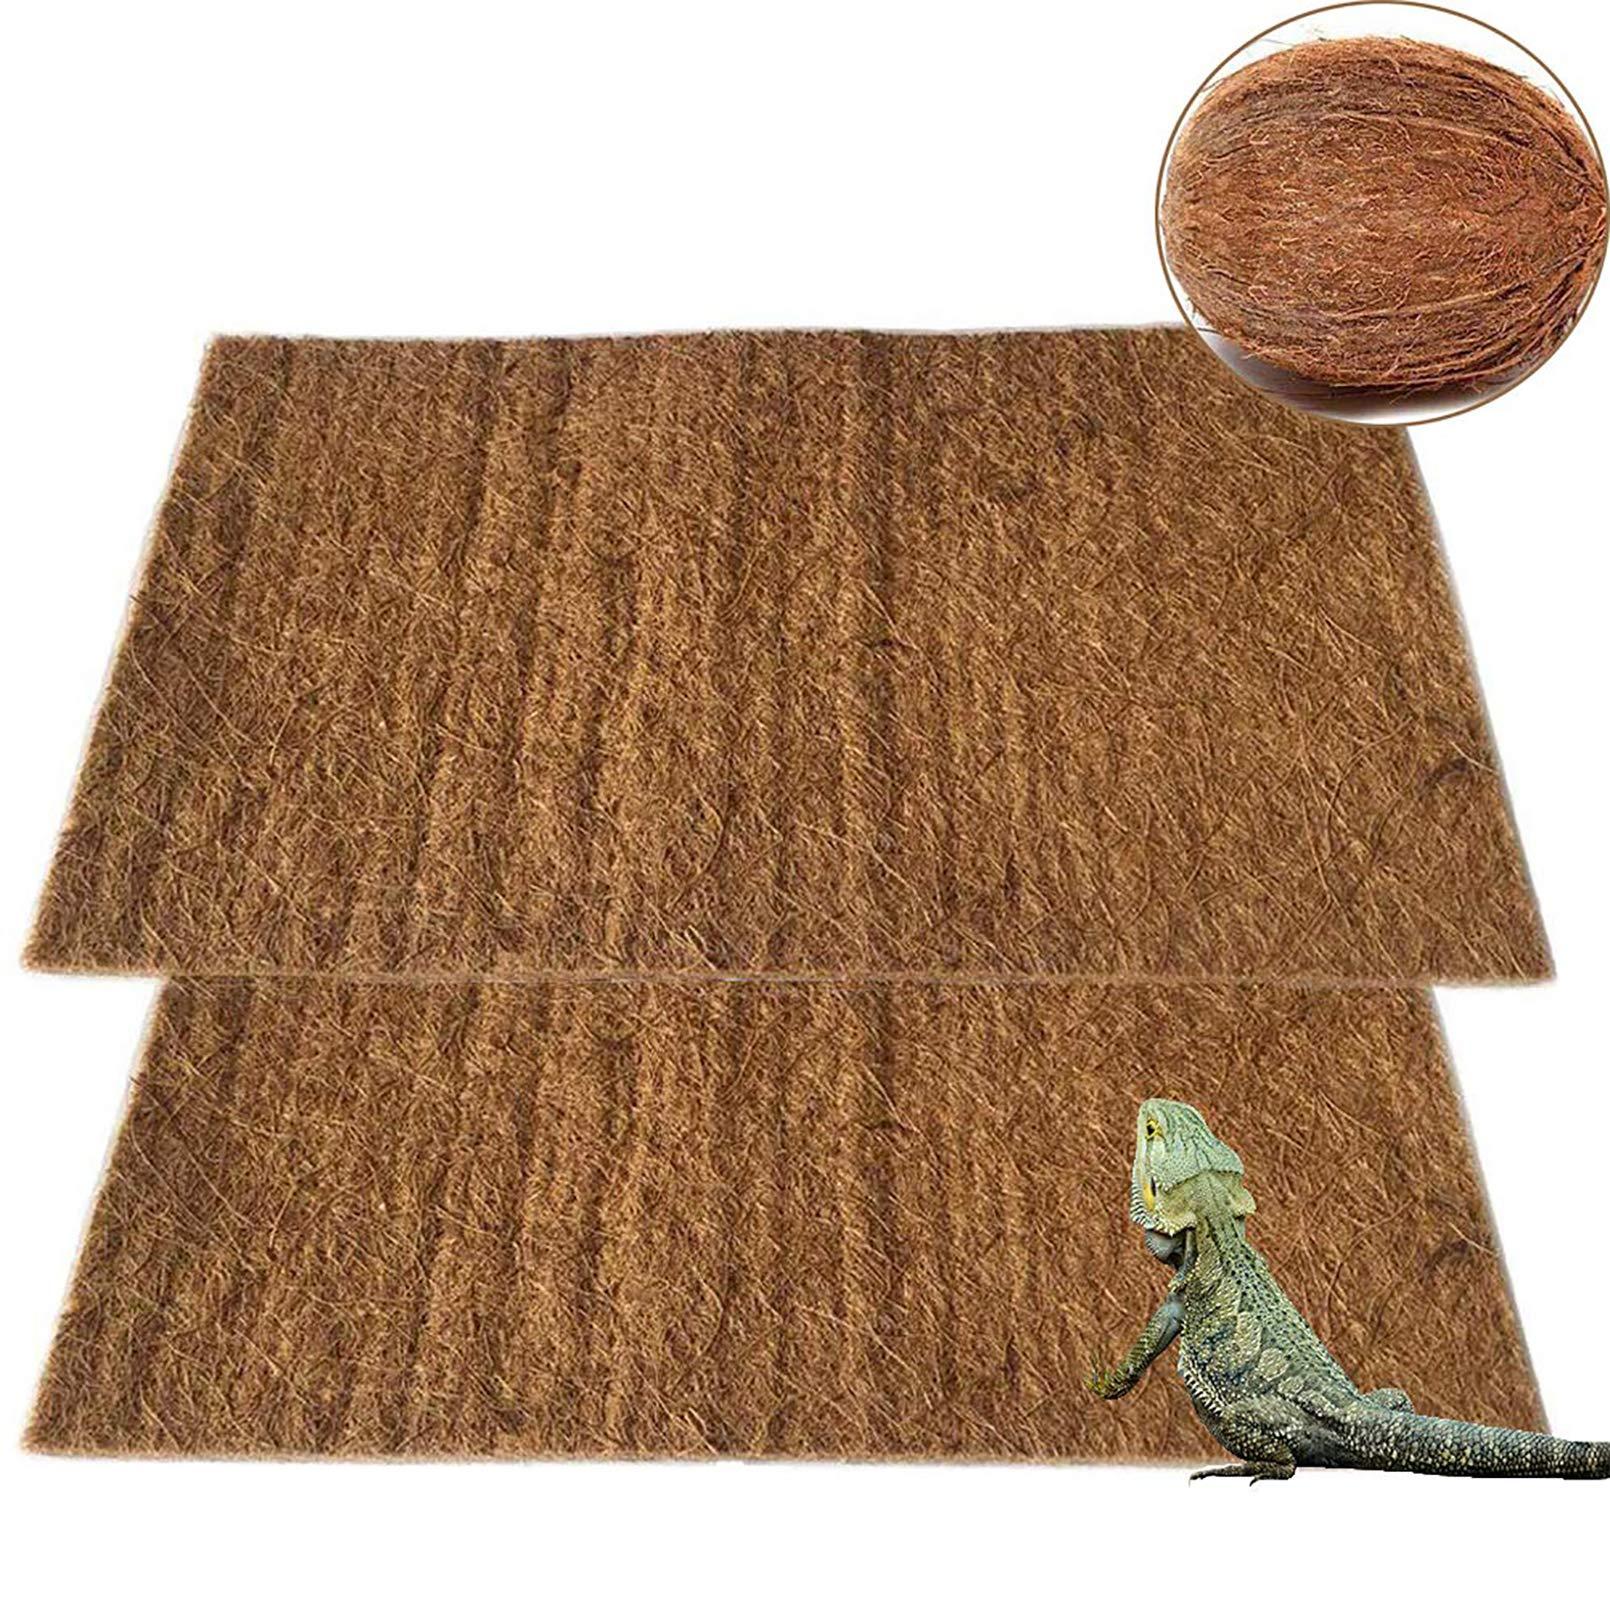 PIVBY Natural Coco Coir Mat Coconut Fiber Reptile Carpet for Lizards Turtles Snakes Iguana